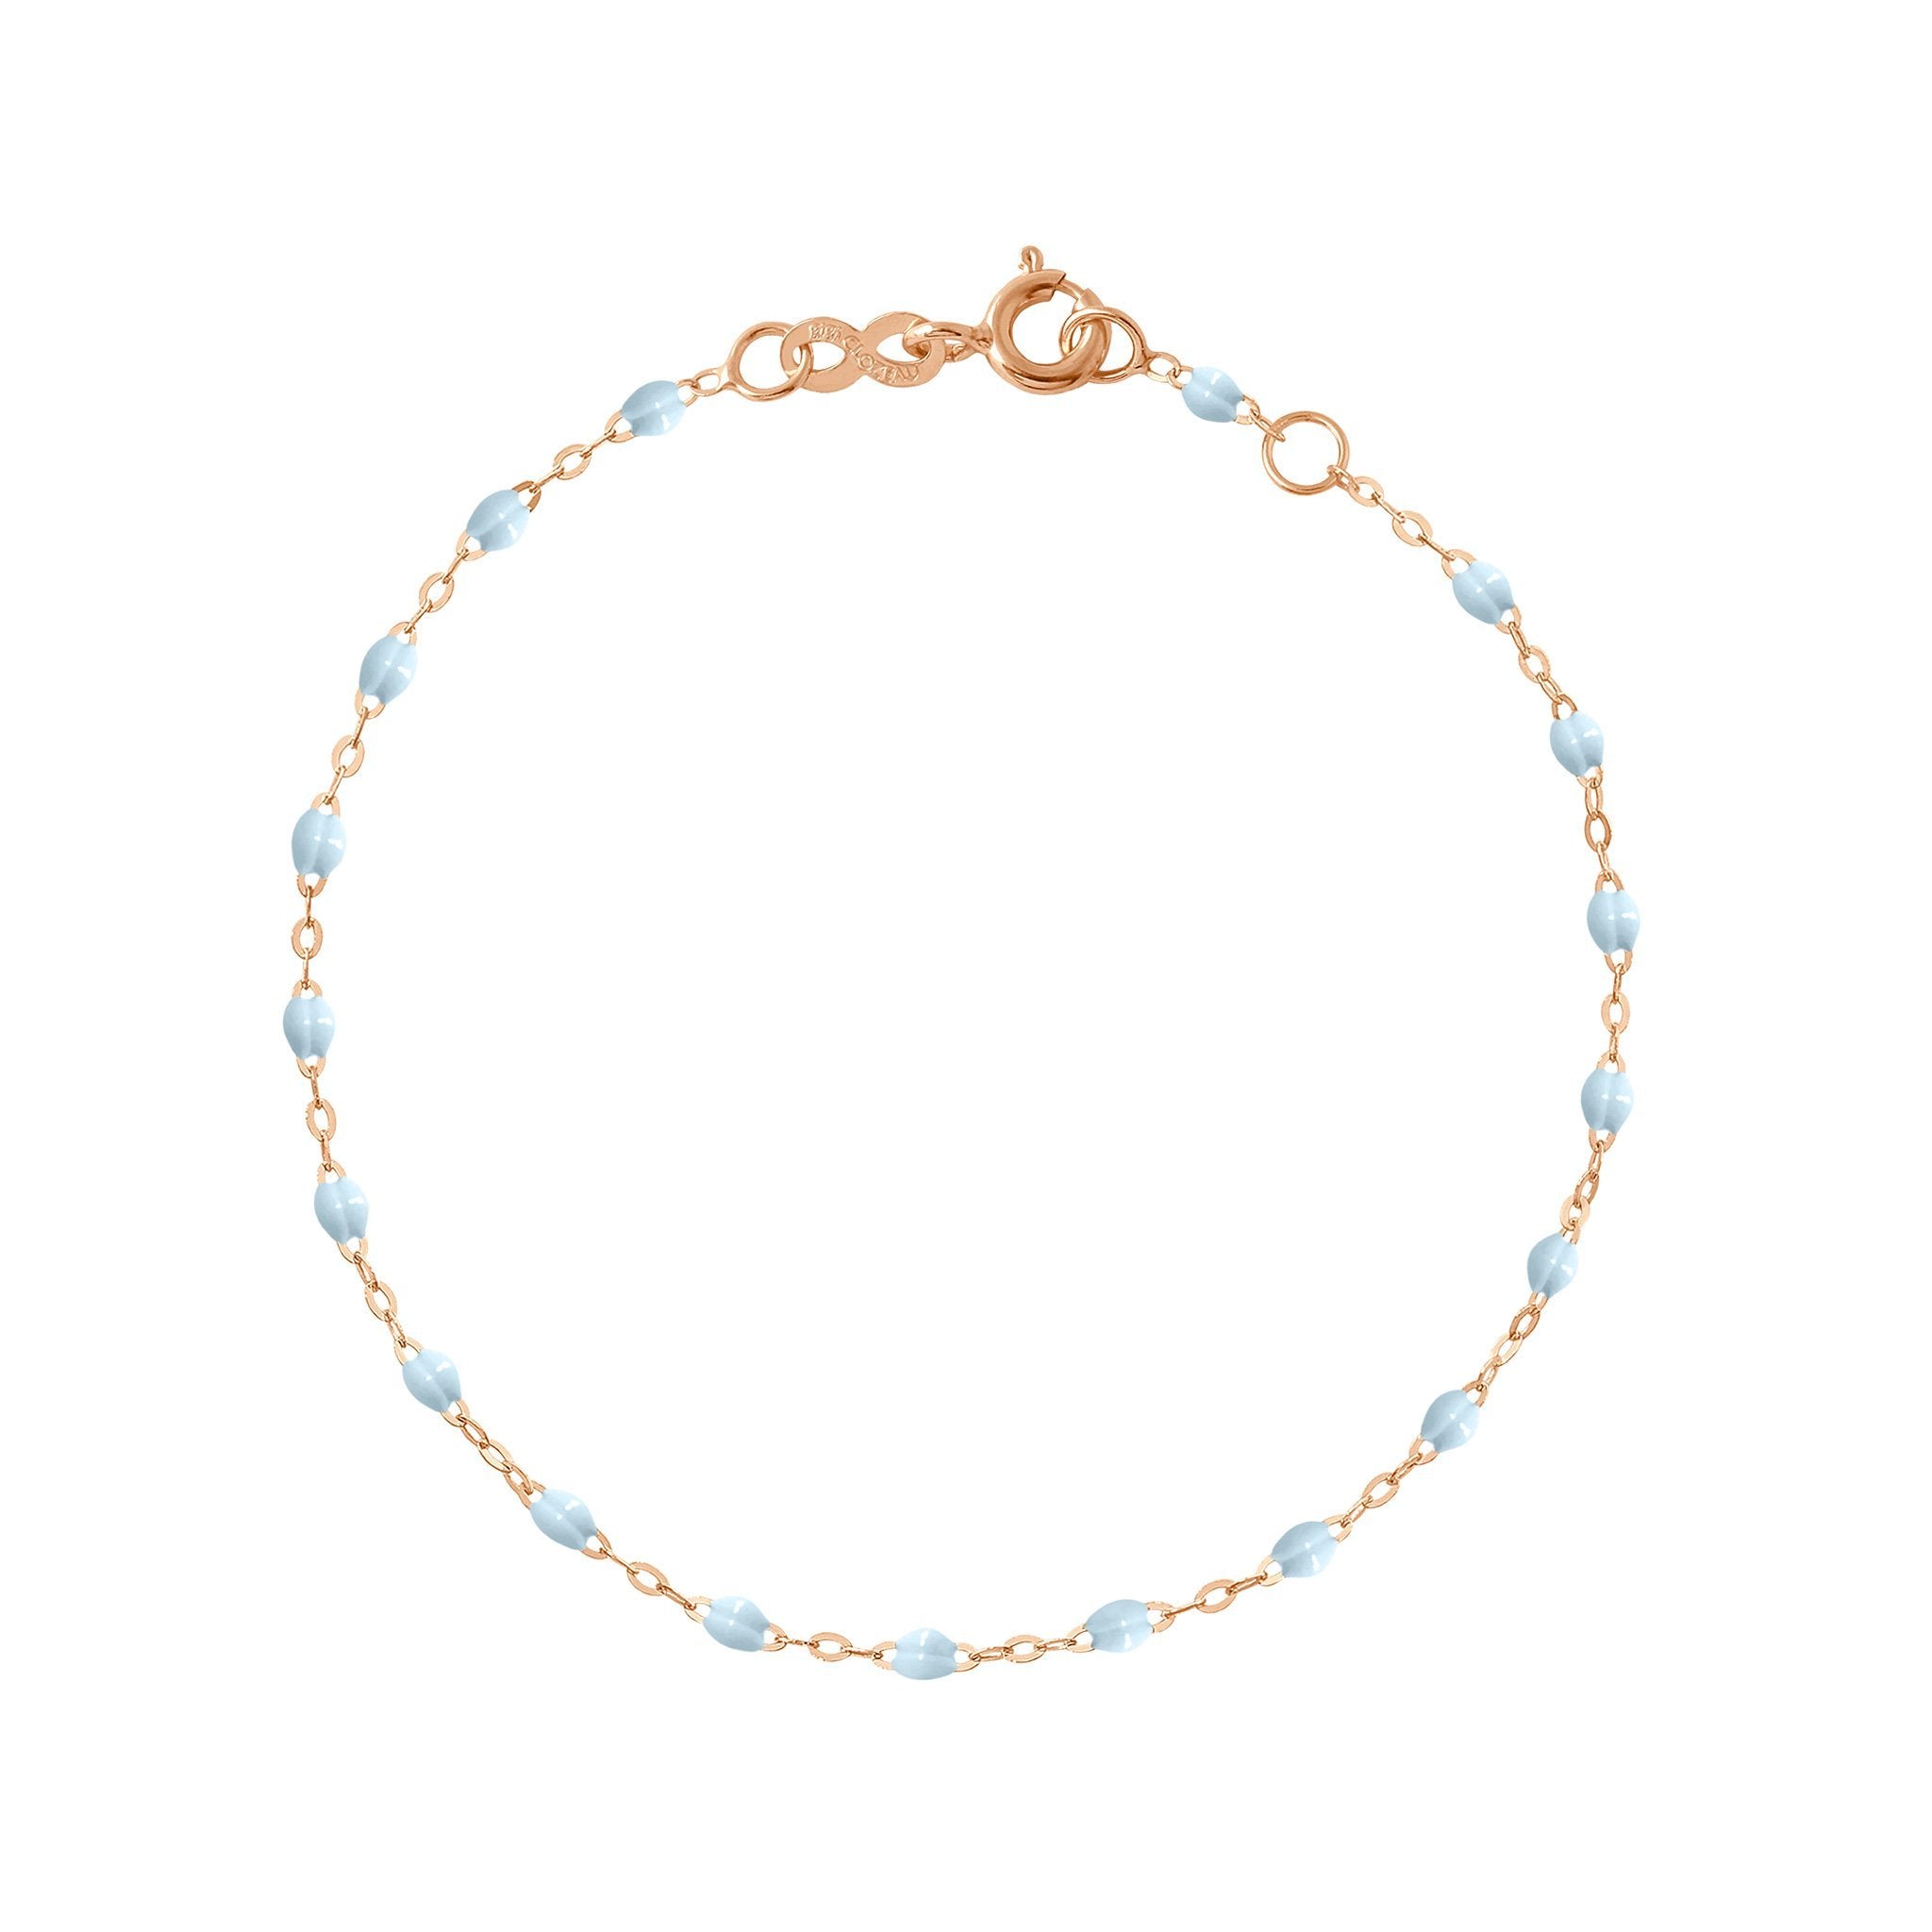 Bracelet bleu layette Classique Gigi, or rose, 15 cm classique gigi Référence :  b3gi001r1515xx -1